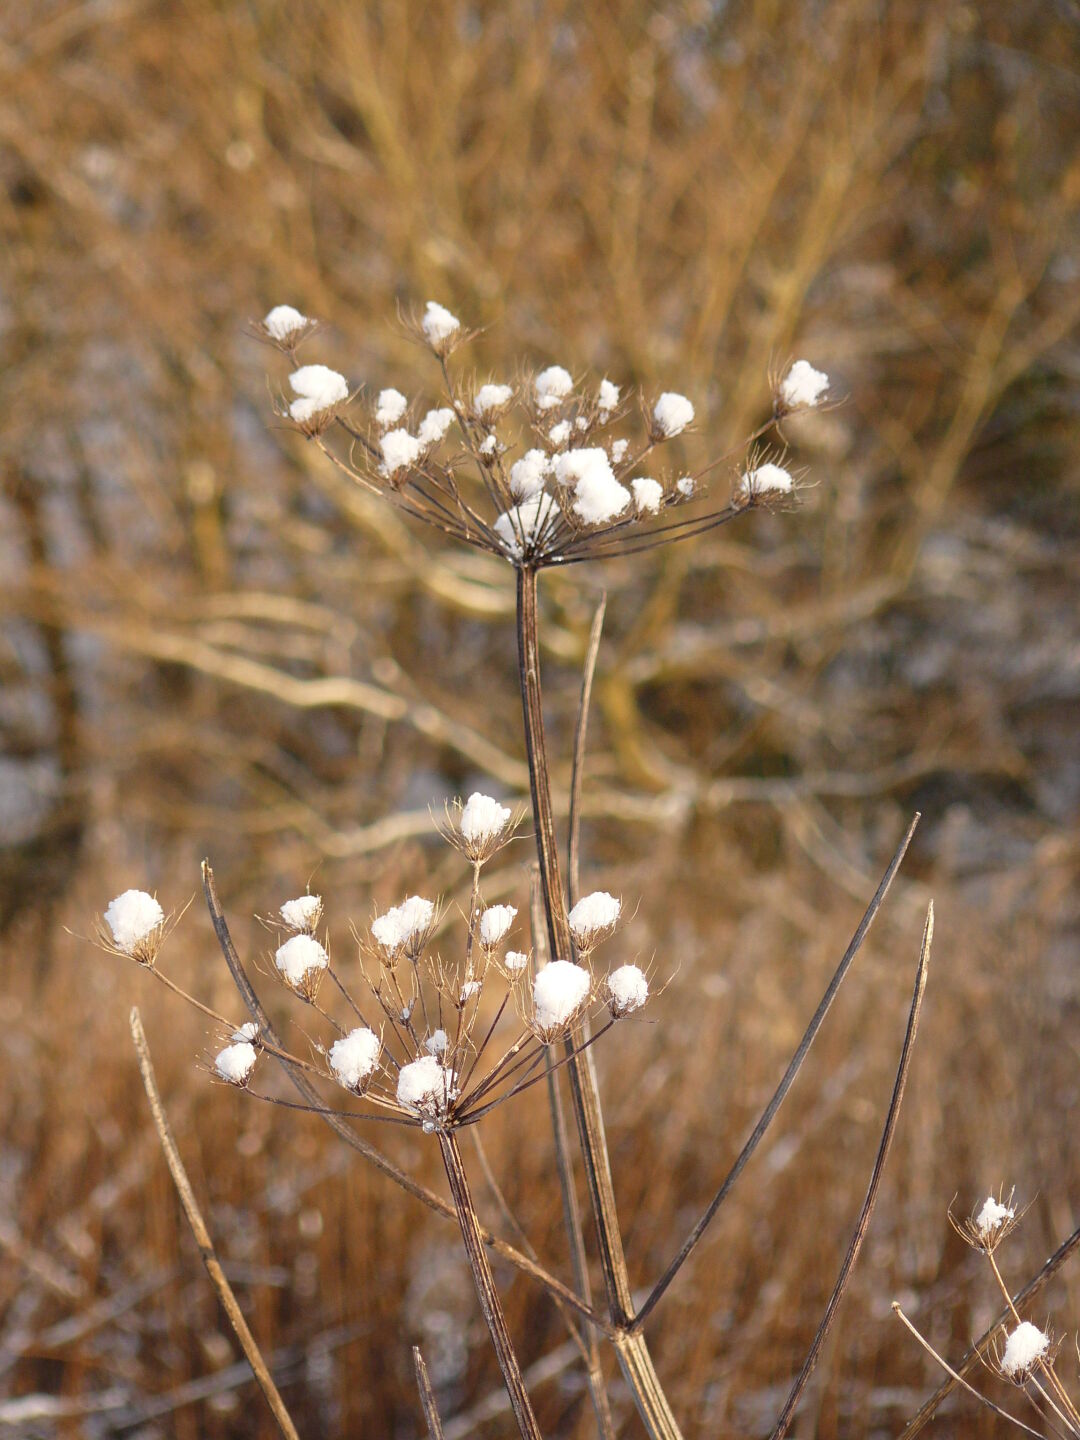 Some weeds wear snowcaps.